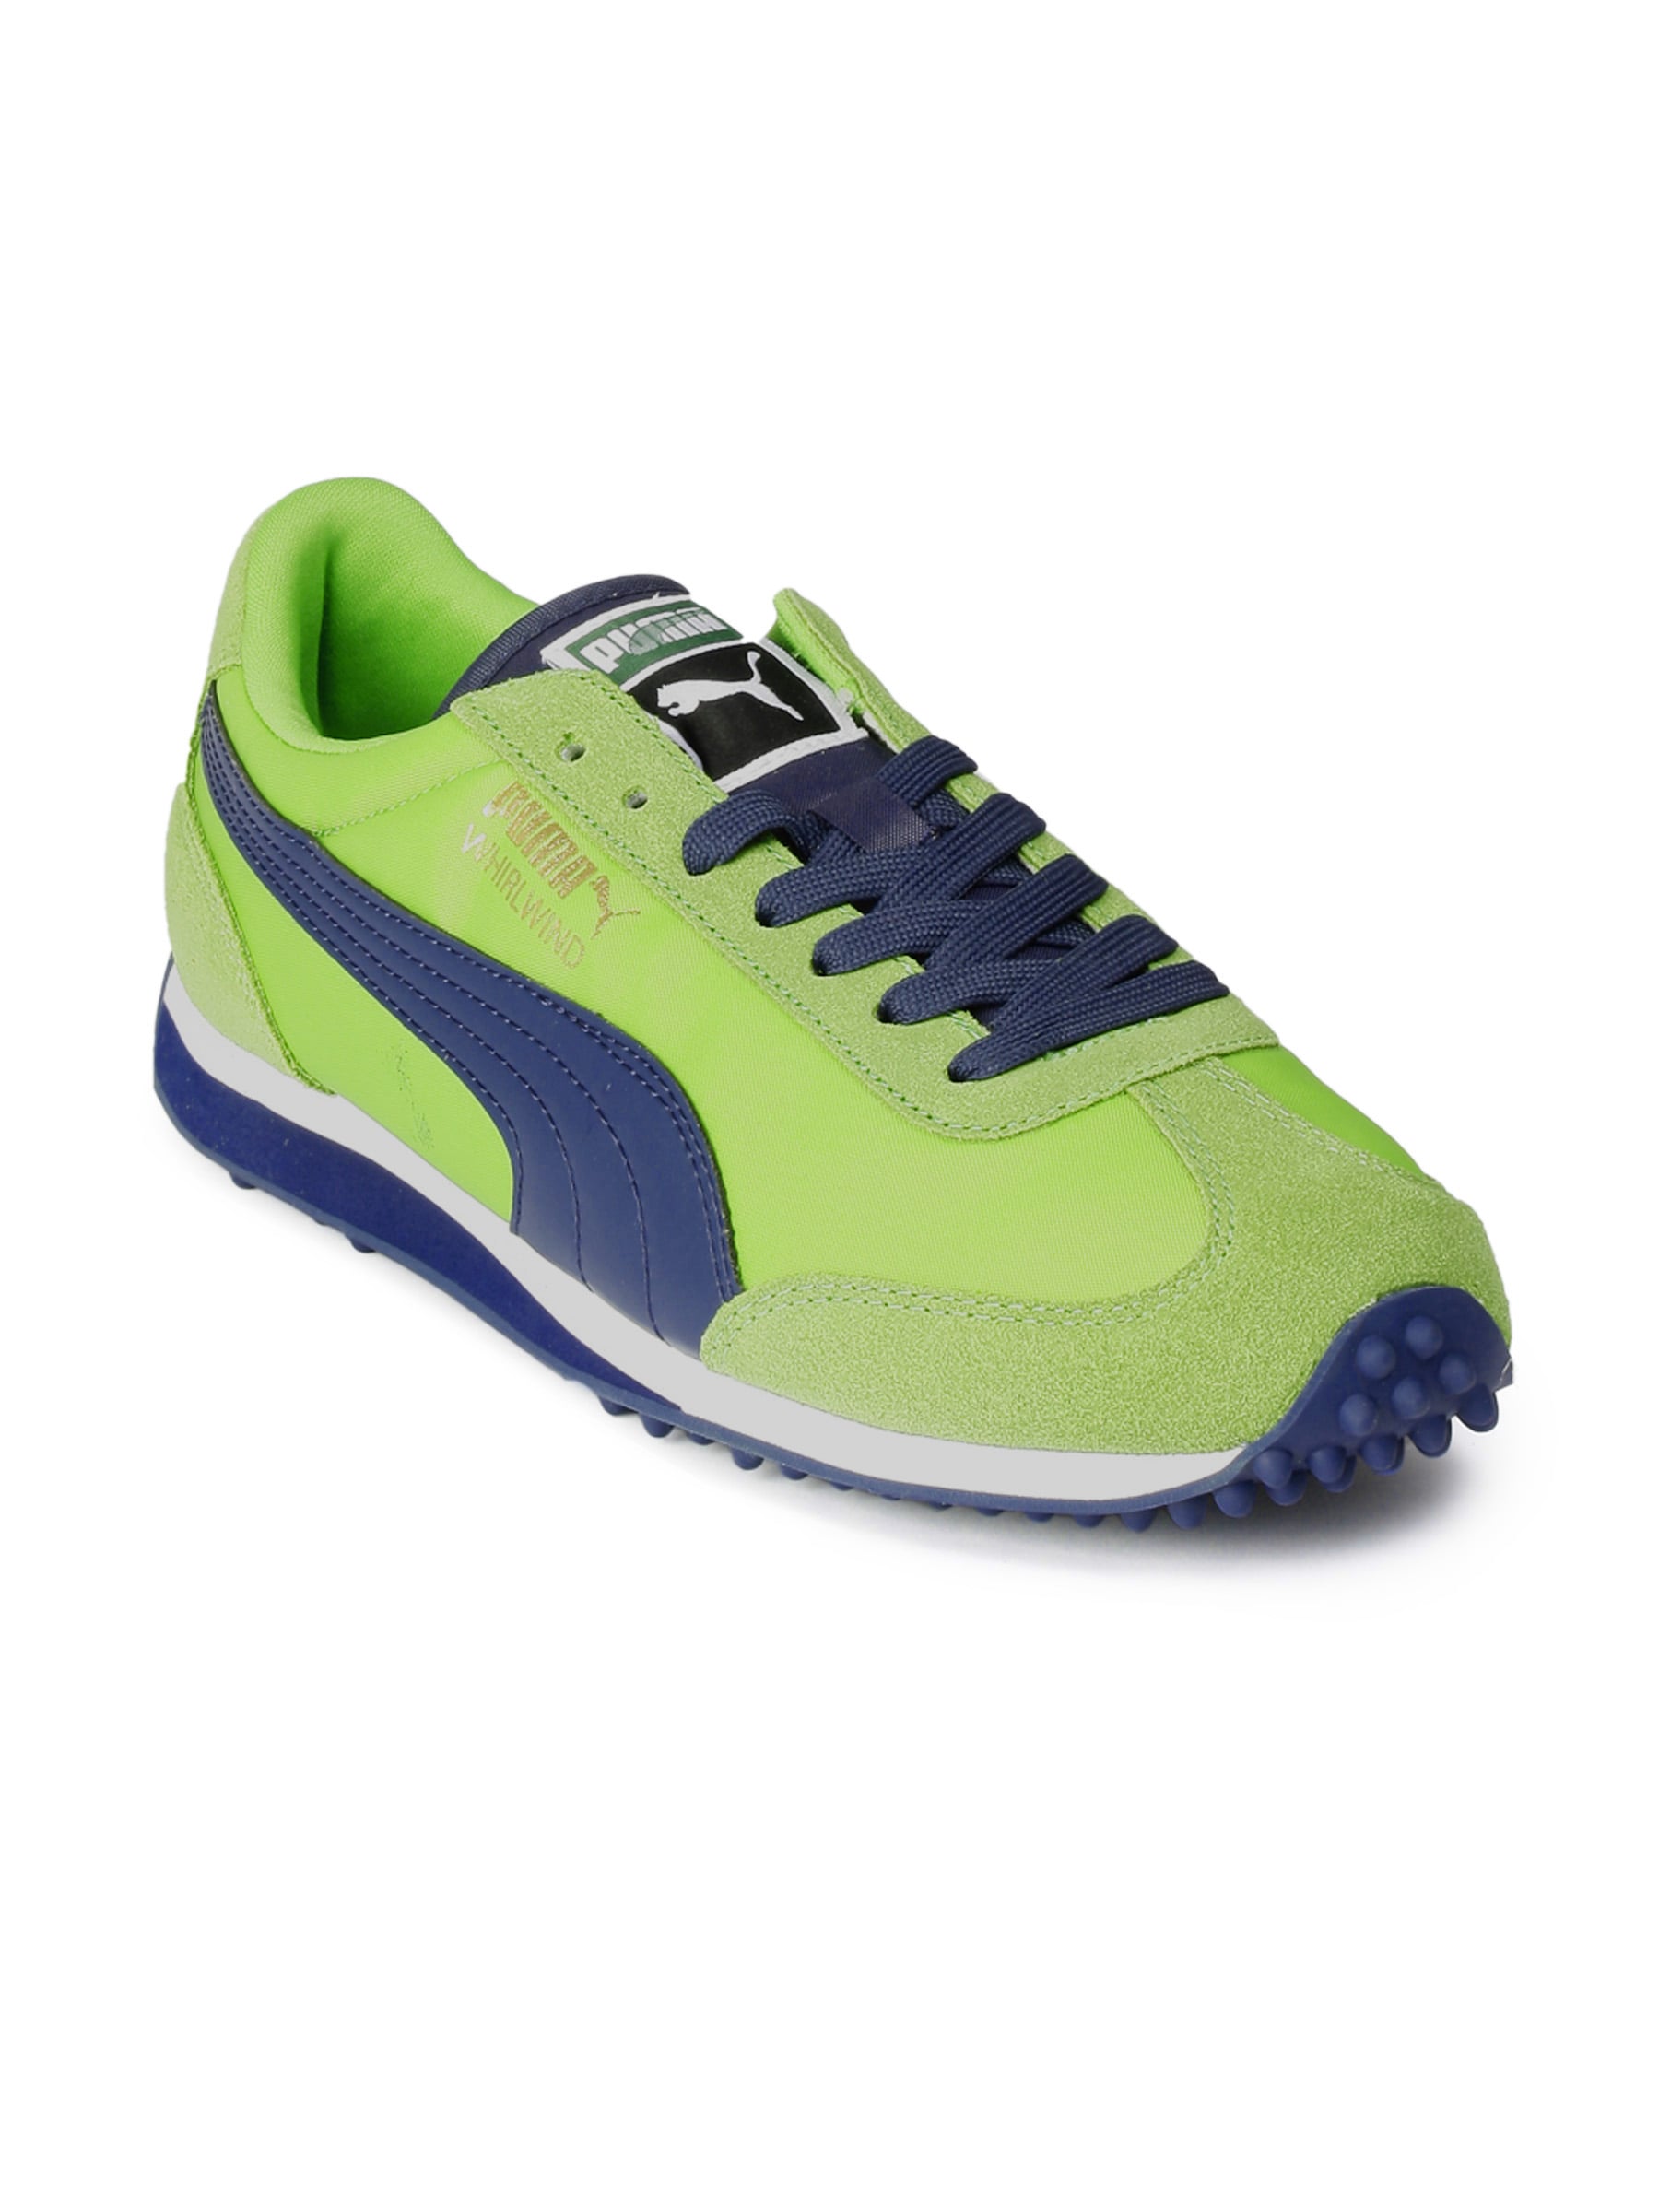 Puma Men Whirlwind Classic Green Sports Shoes